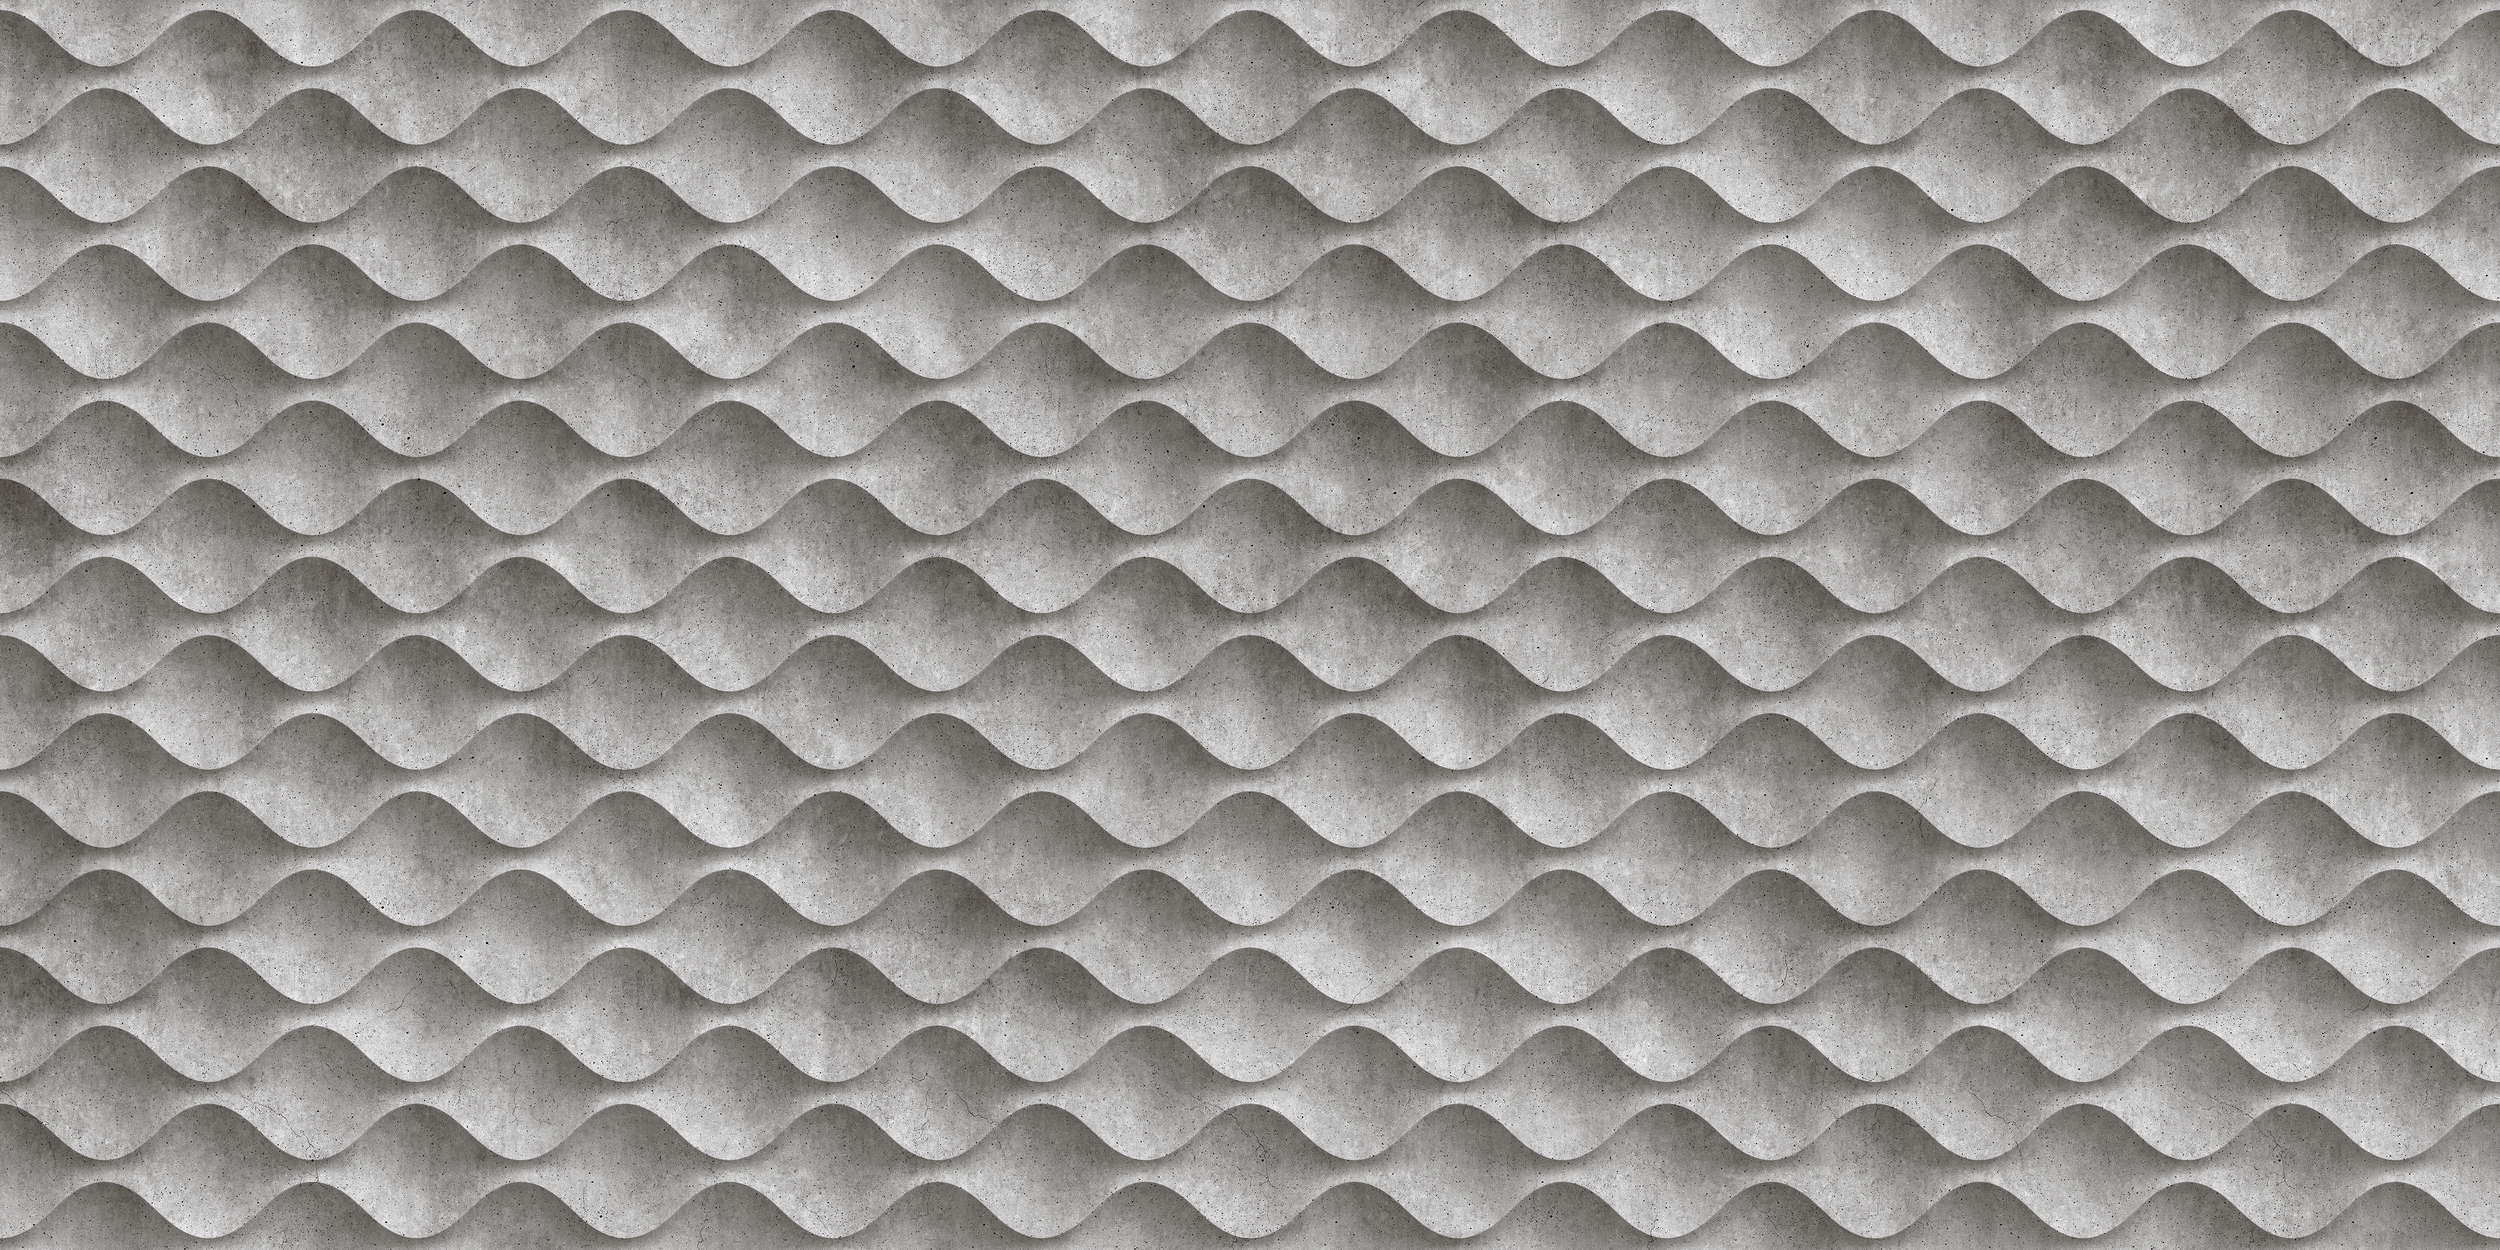             Concrete 1 - Coole 3D Beton-Wellen Fototapete – Grau, Schwarz | Mattes Glattvlies
        